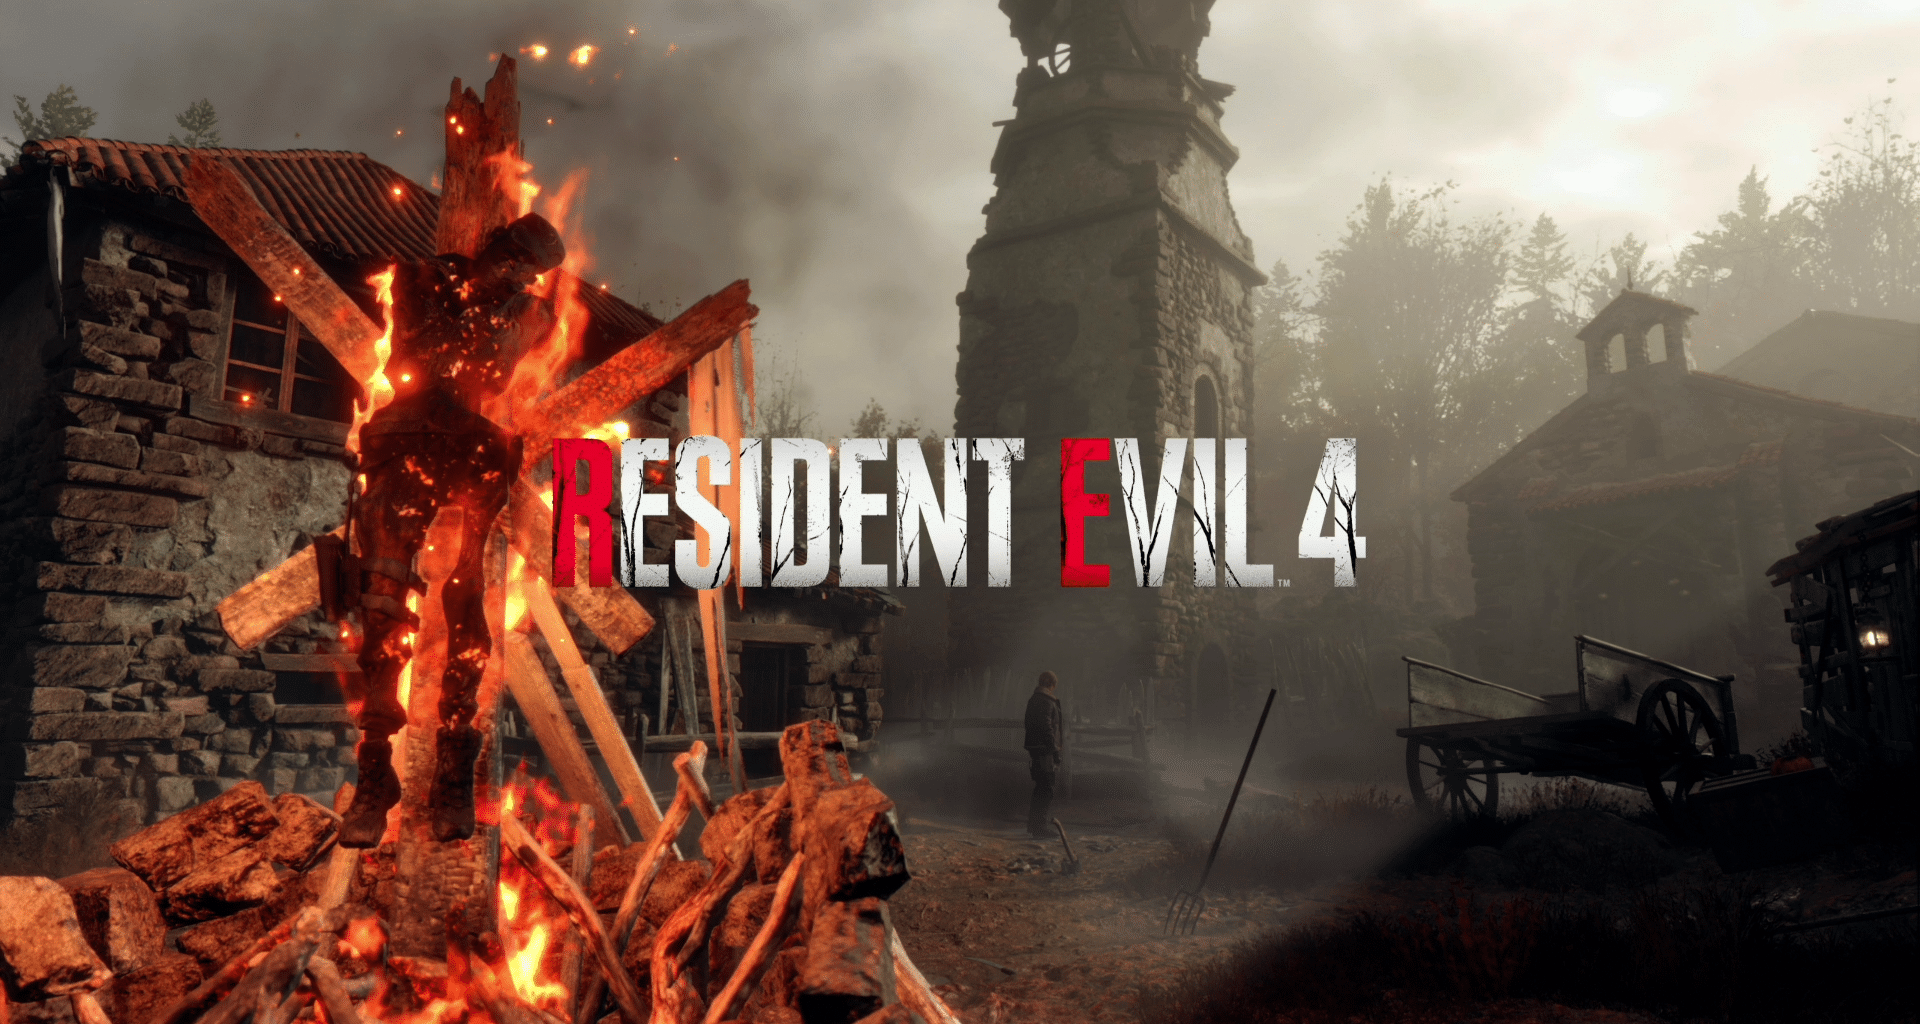 Resident Evil 4 Remake Review 44